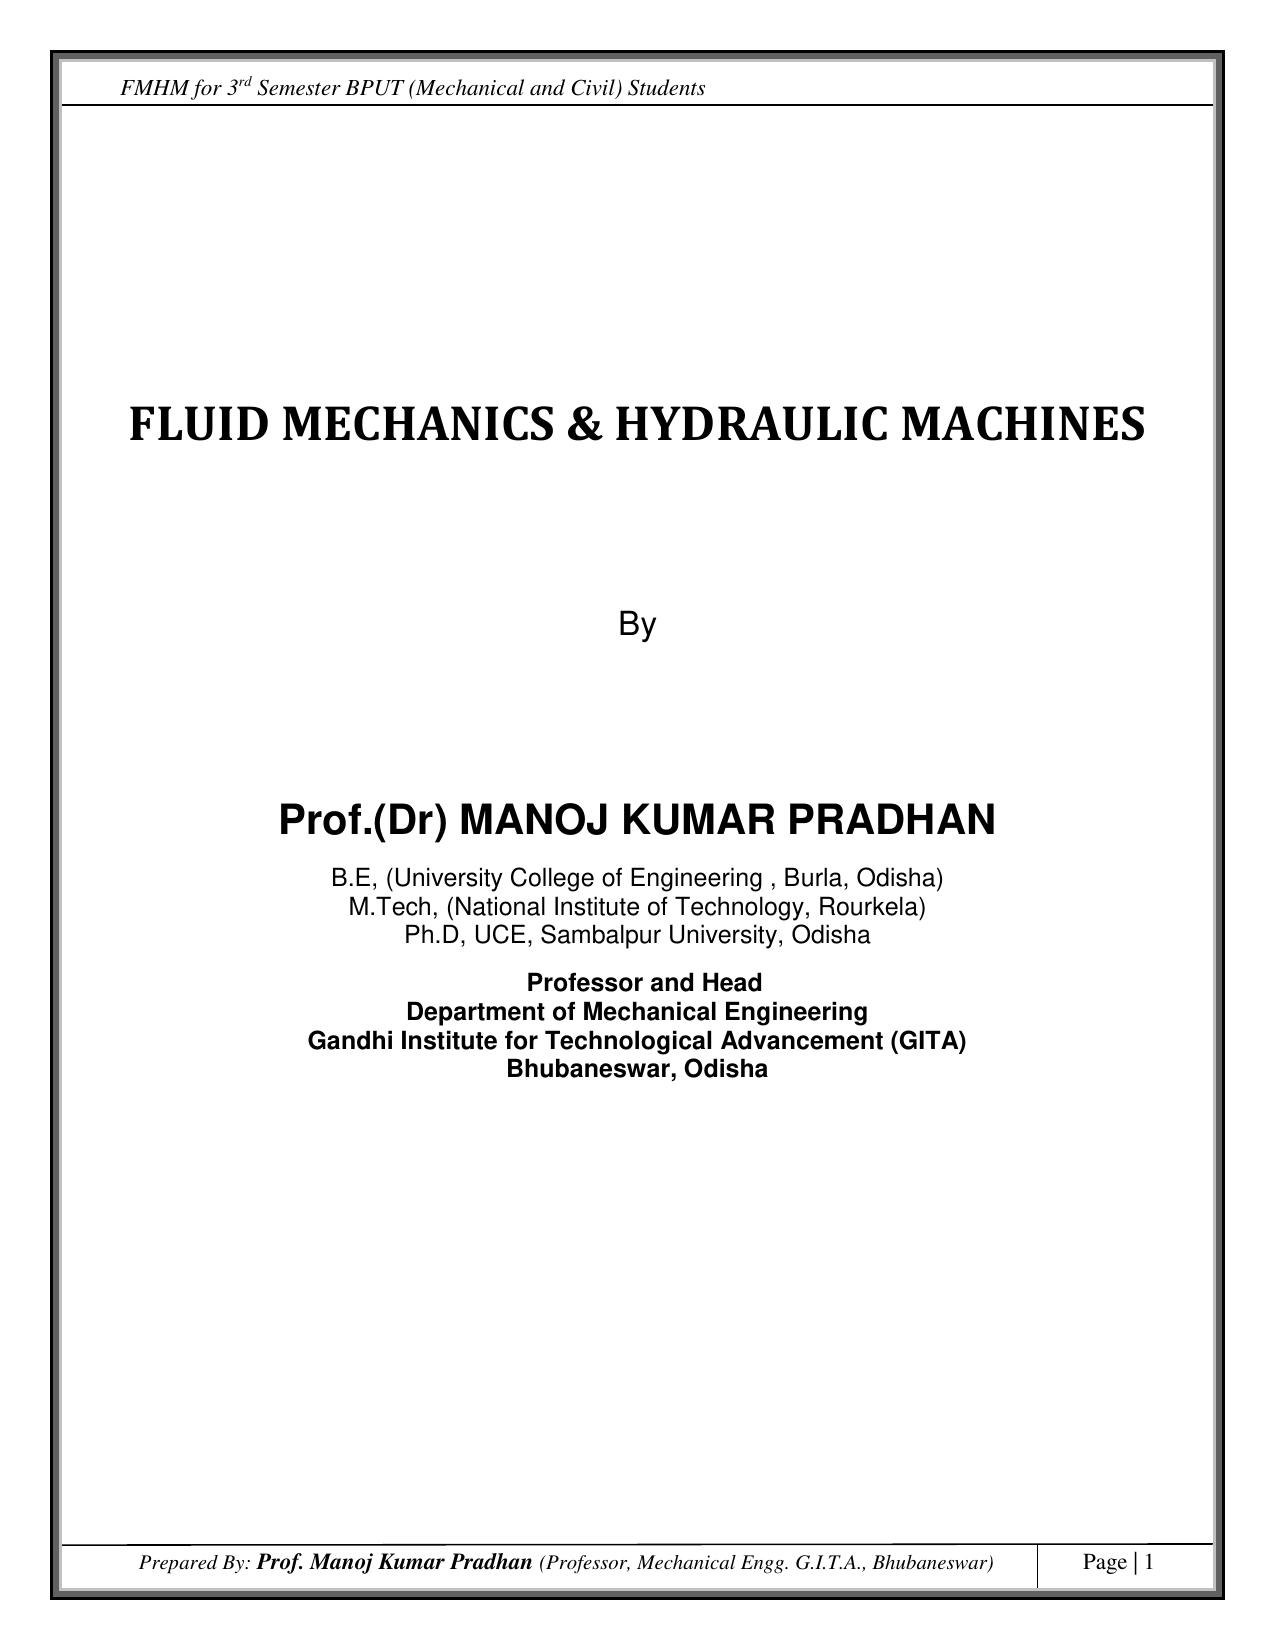 FLUID MECHANICS & HYDRAULIC MACHINES